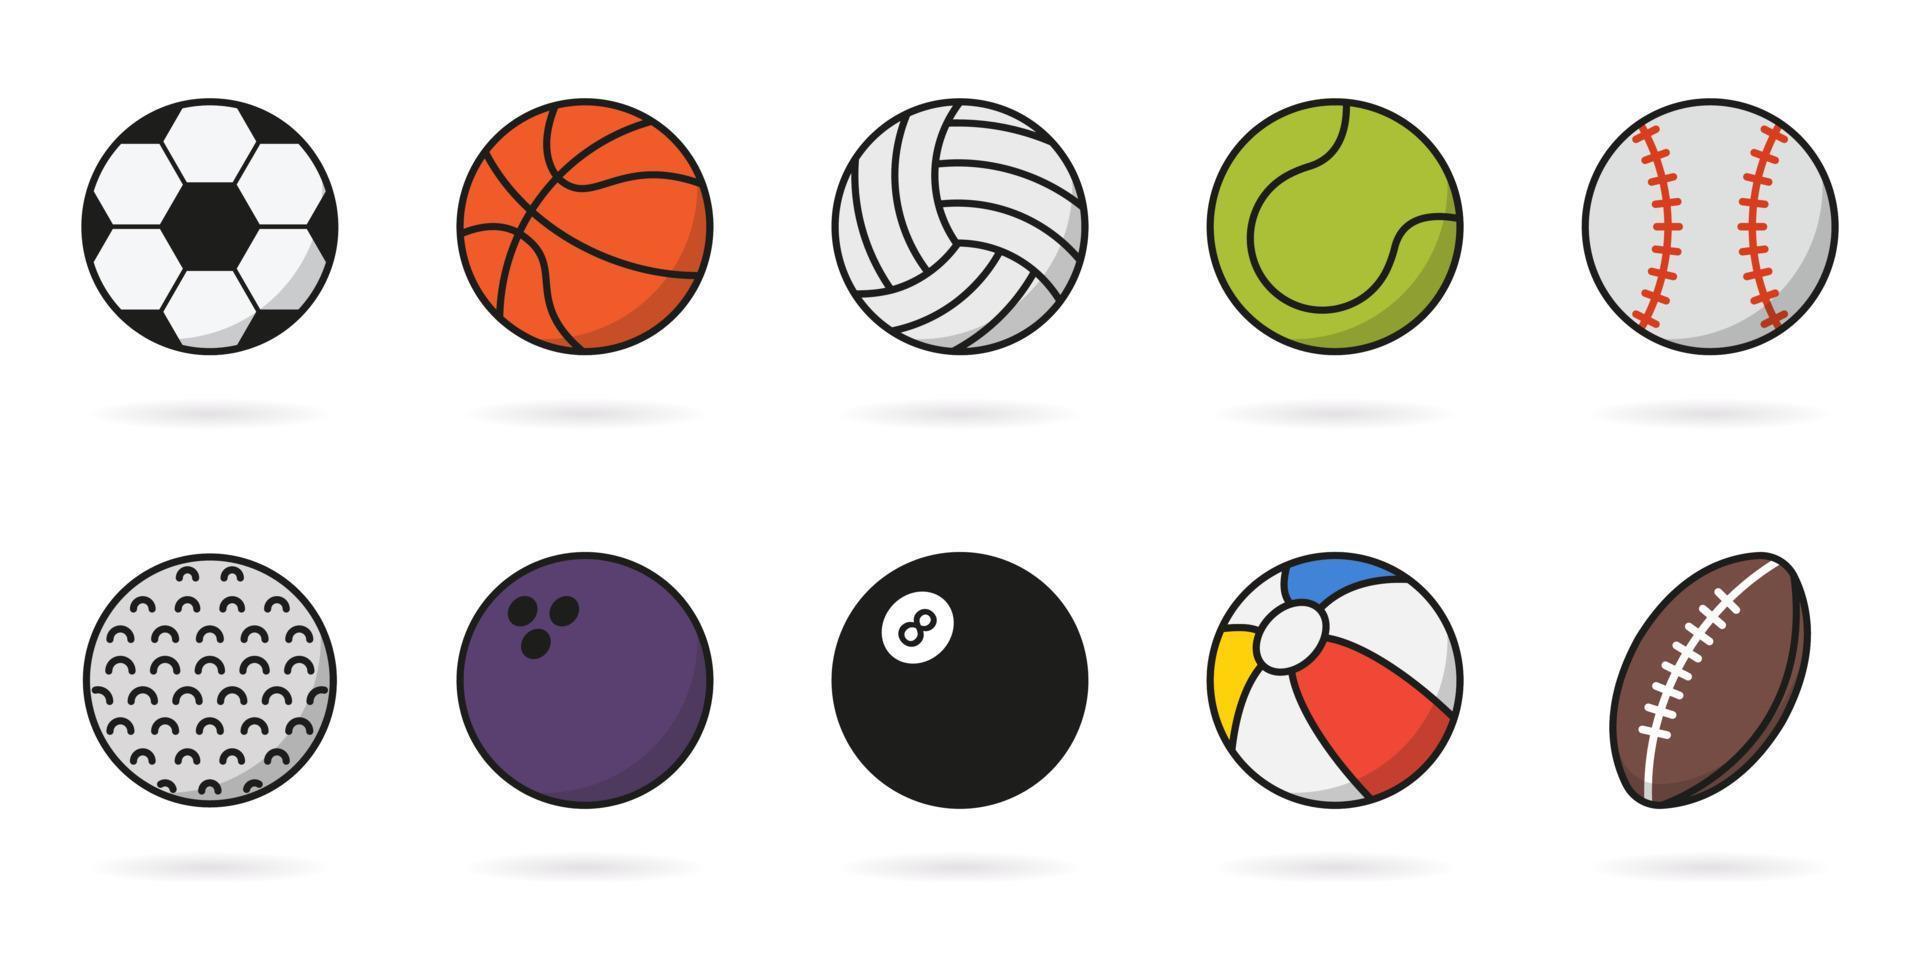 conjunto de iconos de bolas de juego deportivo. colección de pelotas para baloncesto, béisbol, tenis, rugby, fútbol, voleibol, golf, piscina, pictograma de bolos. pelota inflable, símbolo de softbol. ilustración vectorial vector